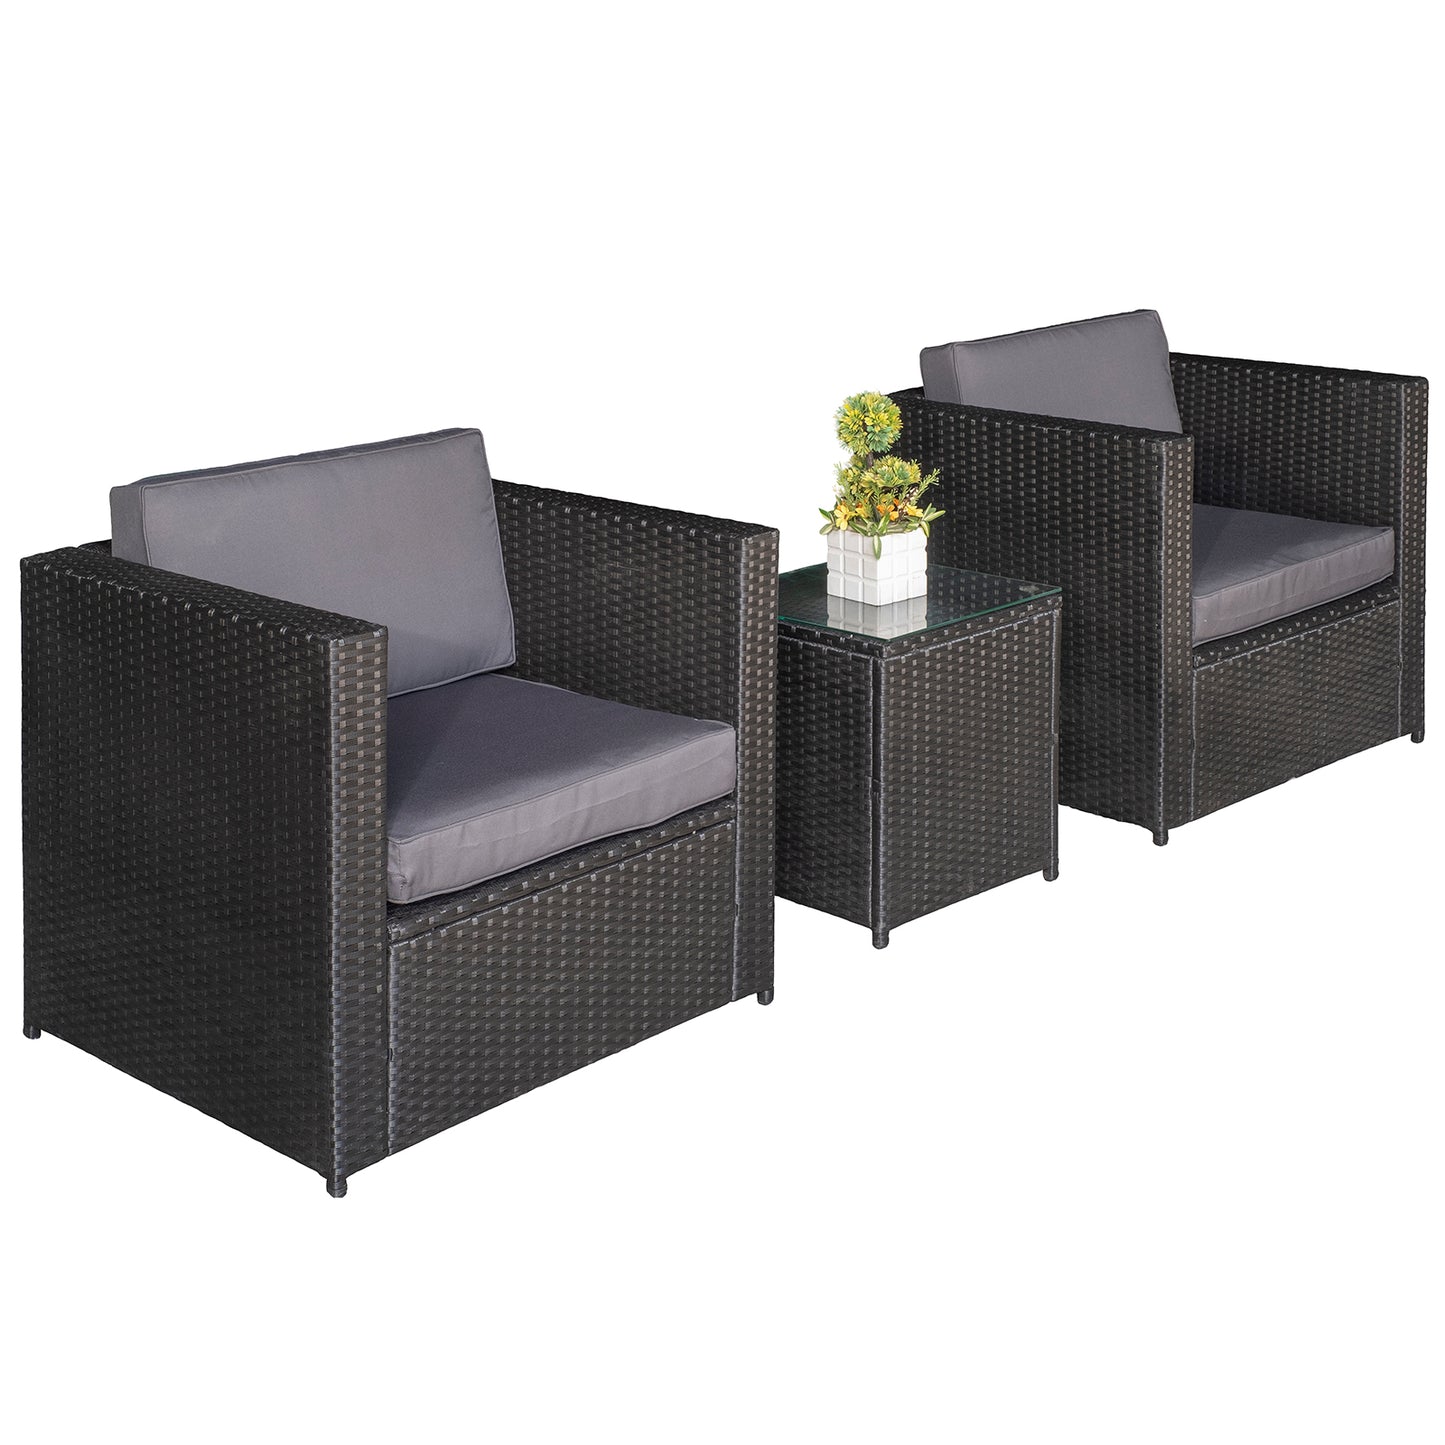 Outsunny 3 Pcs Rattan Sofa  Furniture Set W/Cushions, Steel Frame-Black